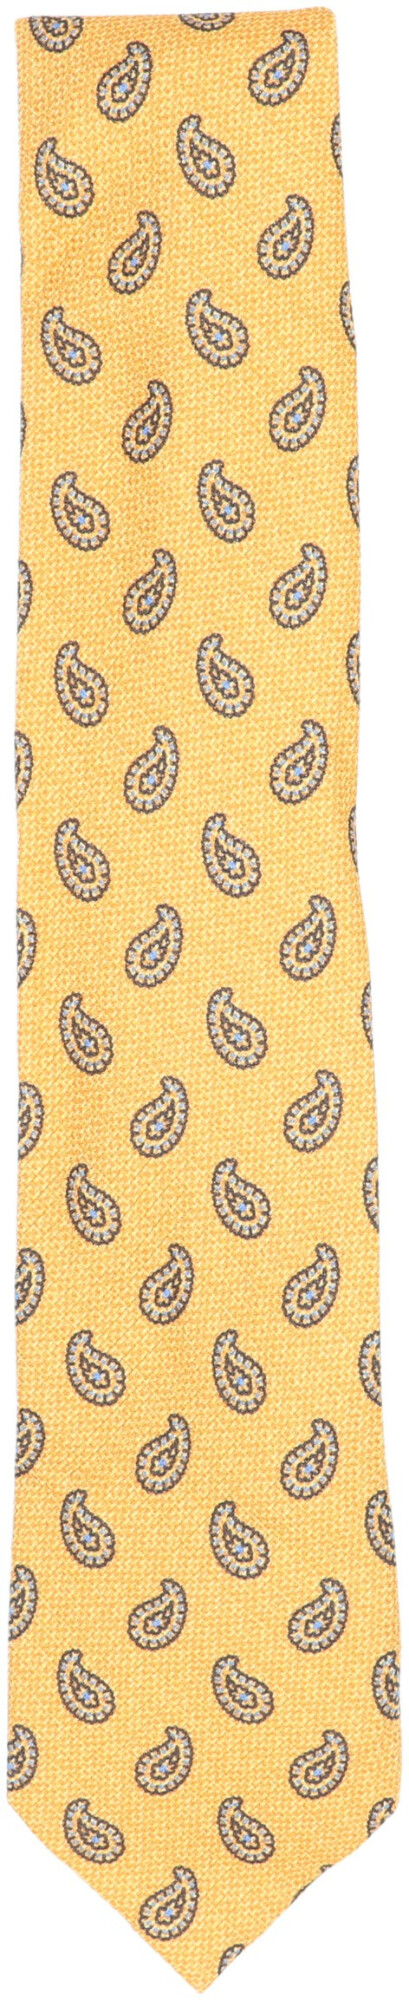 Ermenegildo Zegna Men's Orange Blue Brown Small Paisley Print Tie Necktie  One Size